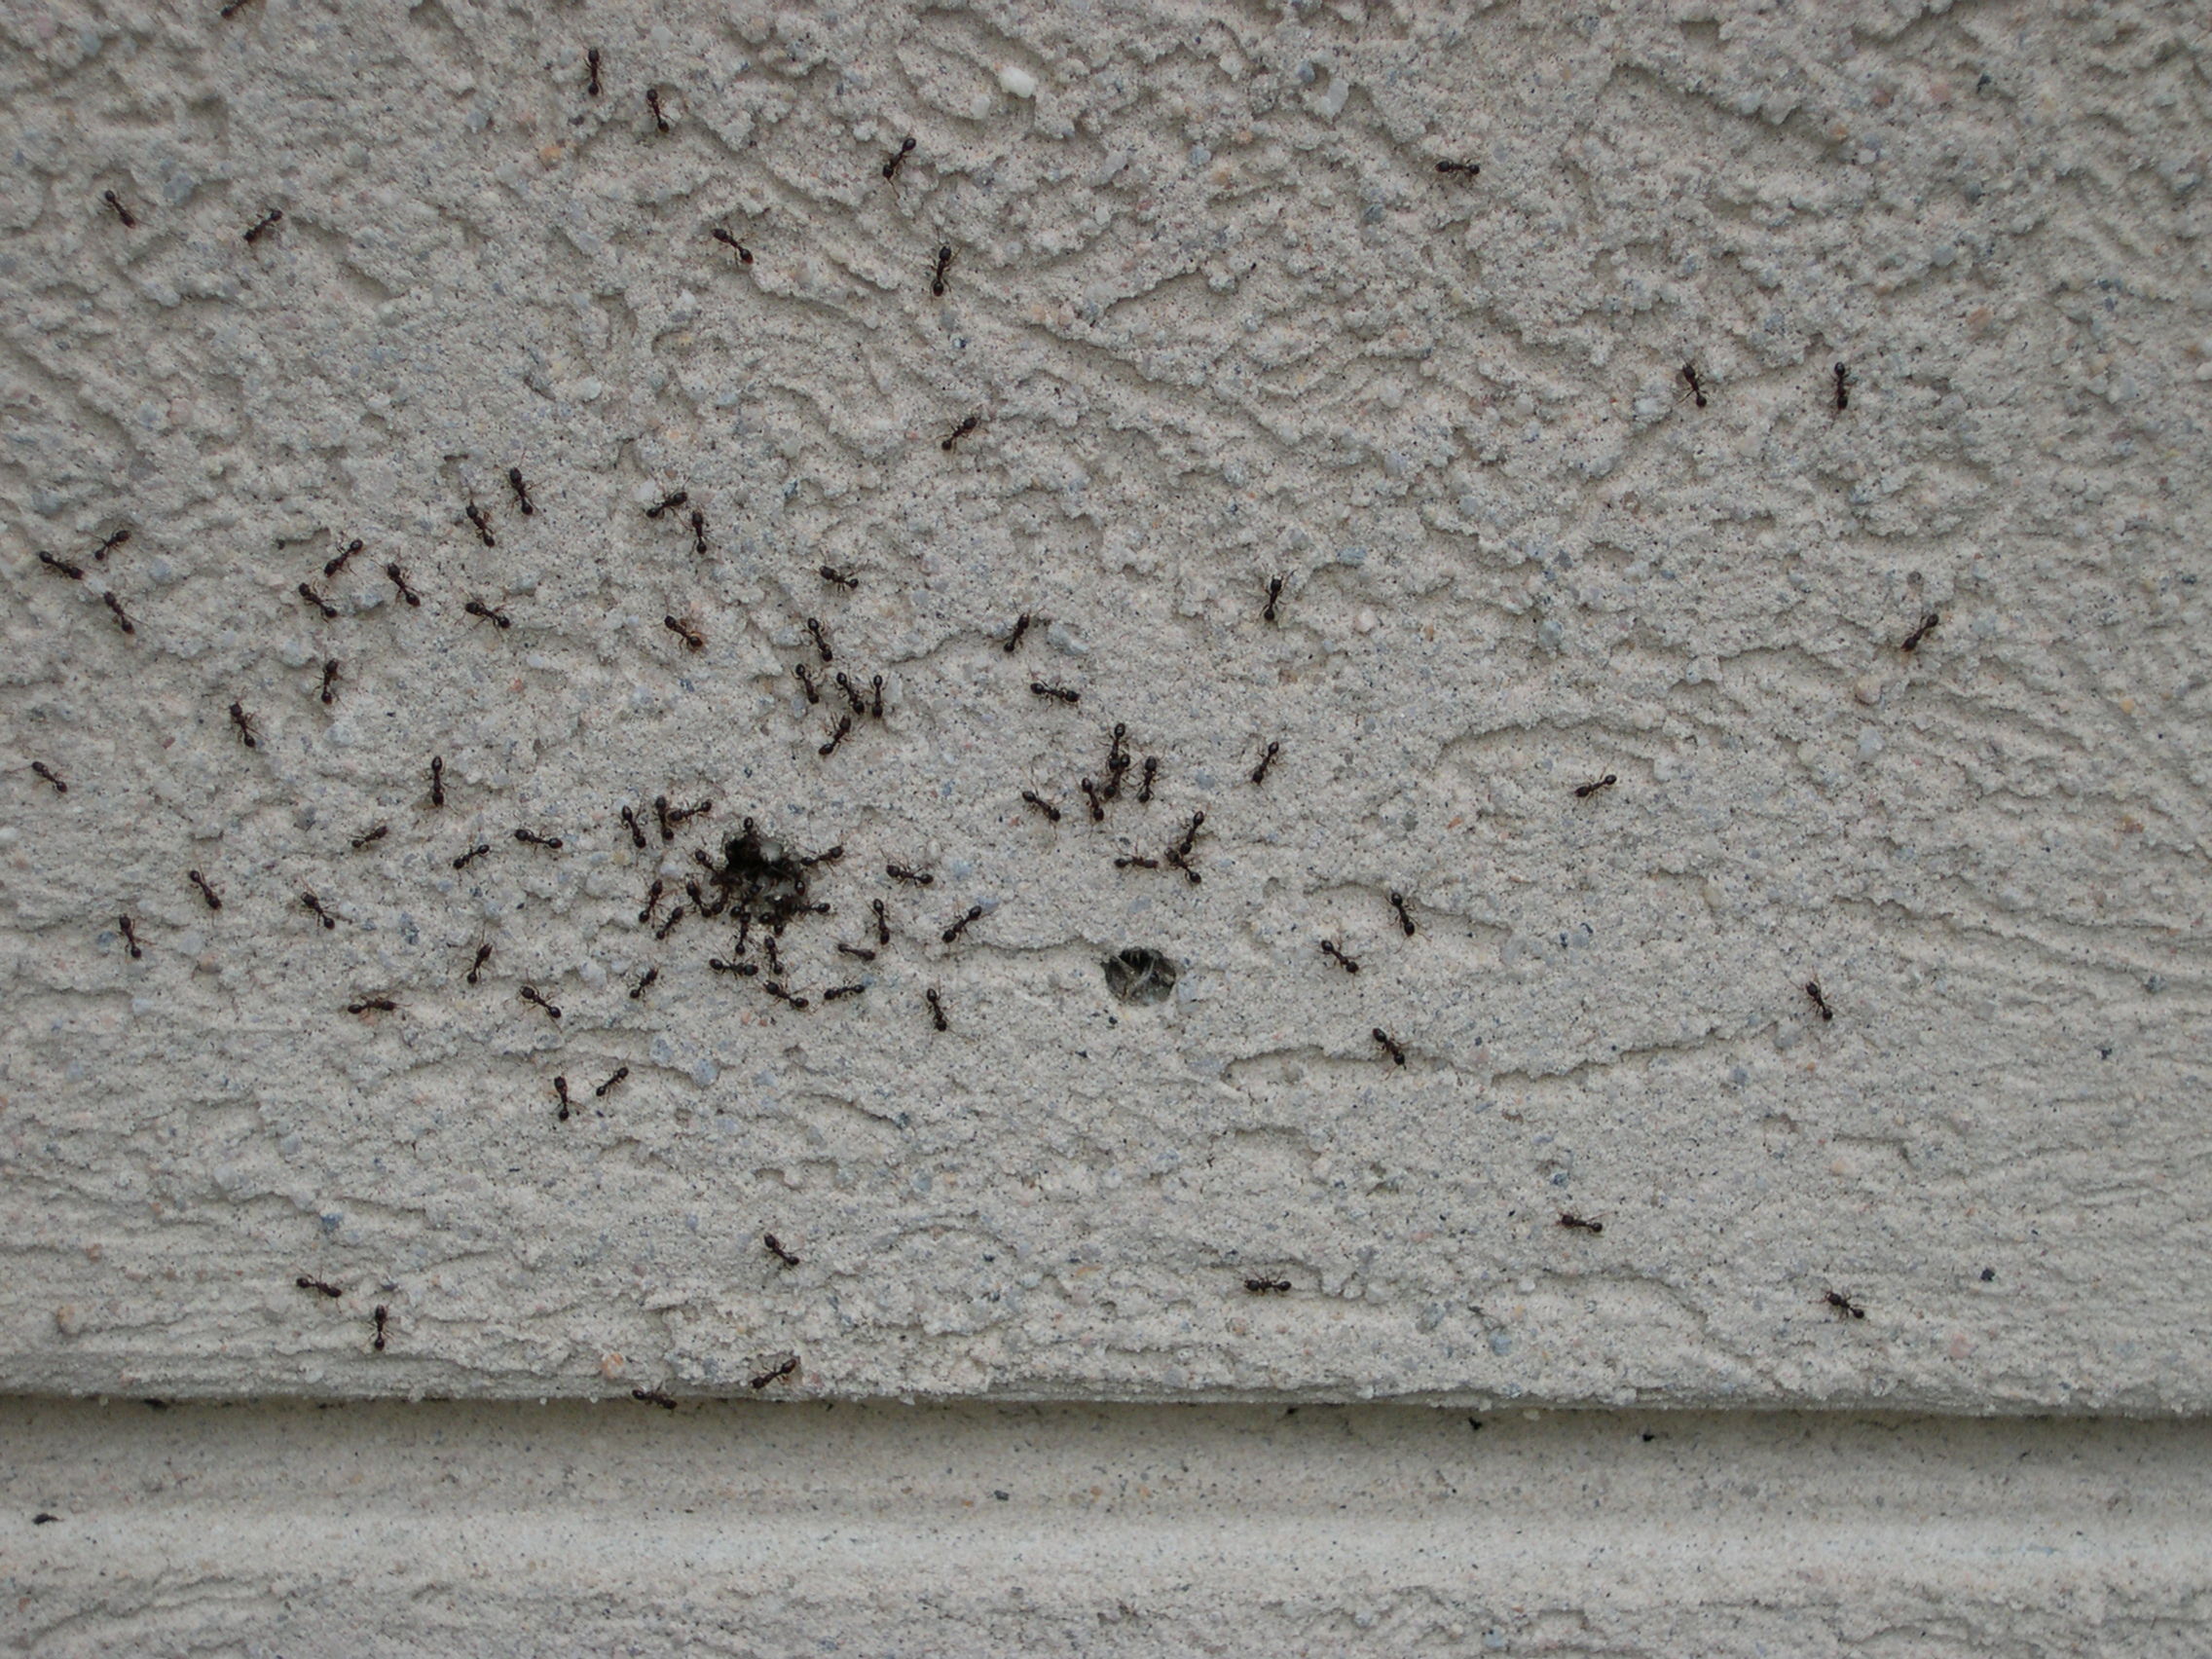 Ants behind stucco